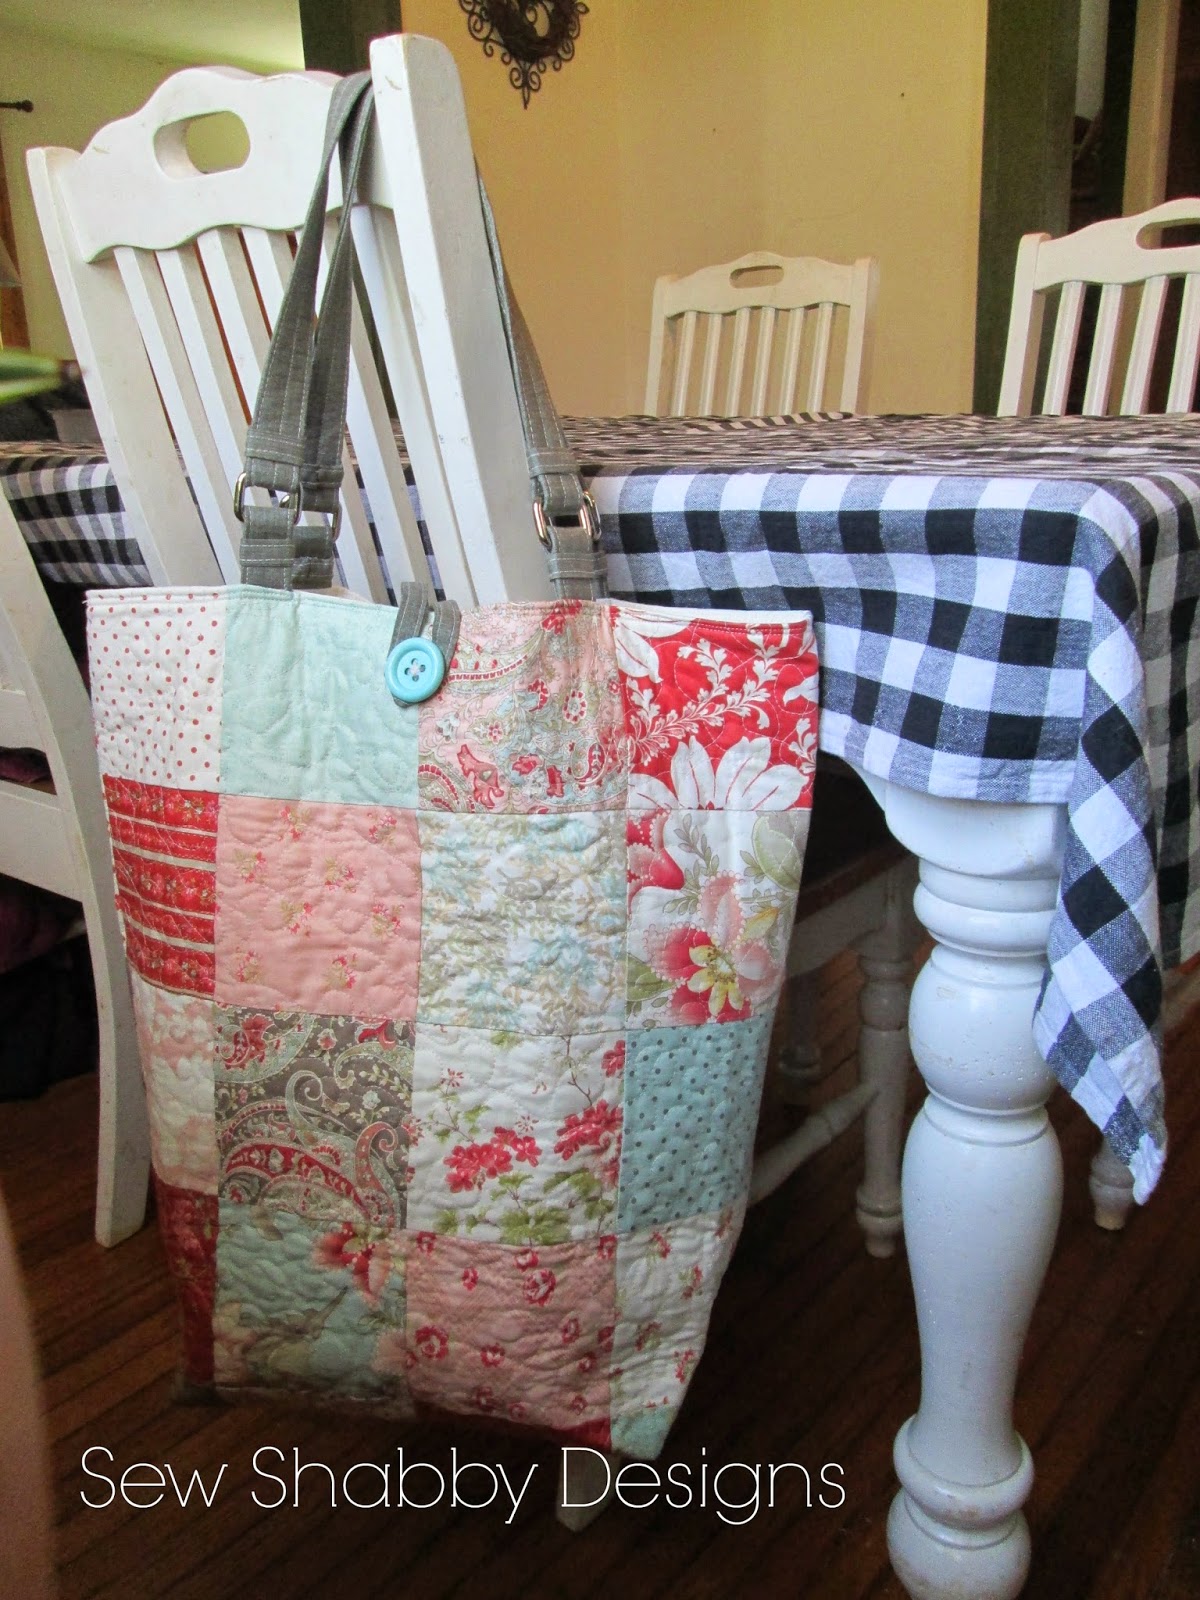 ... bag I have sewn. I used pre cut charm squares (5 inch squares) fabrics